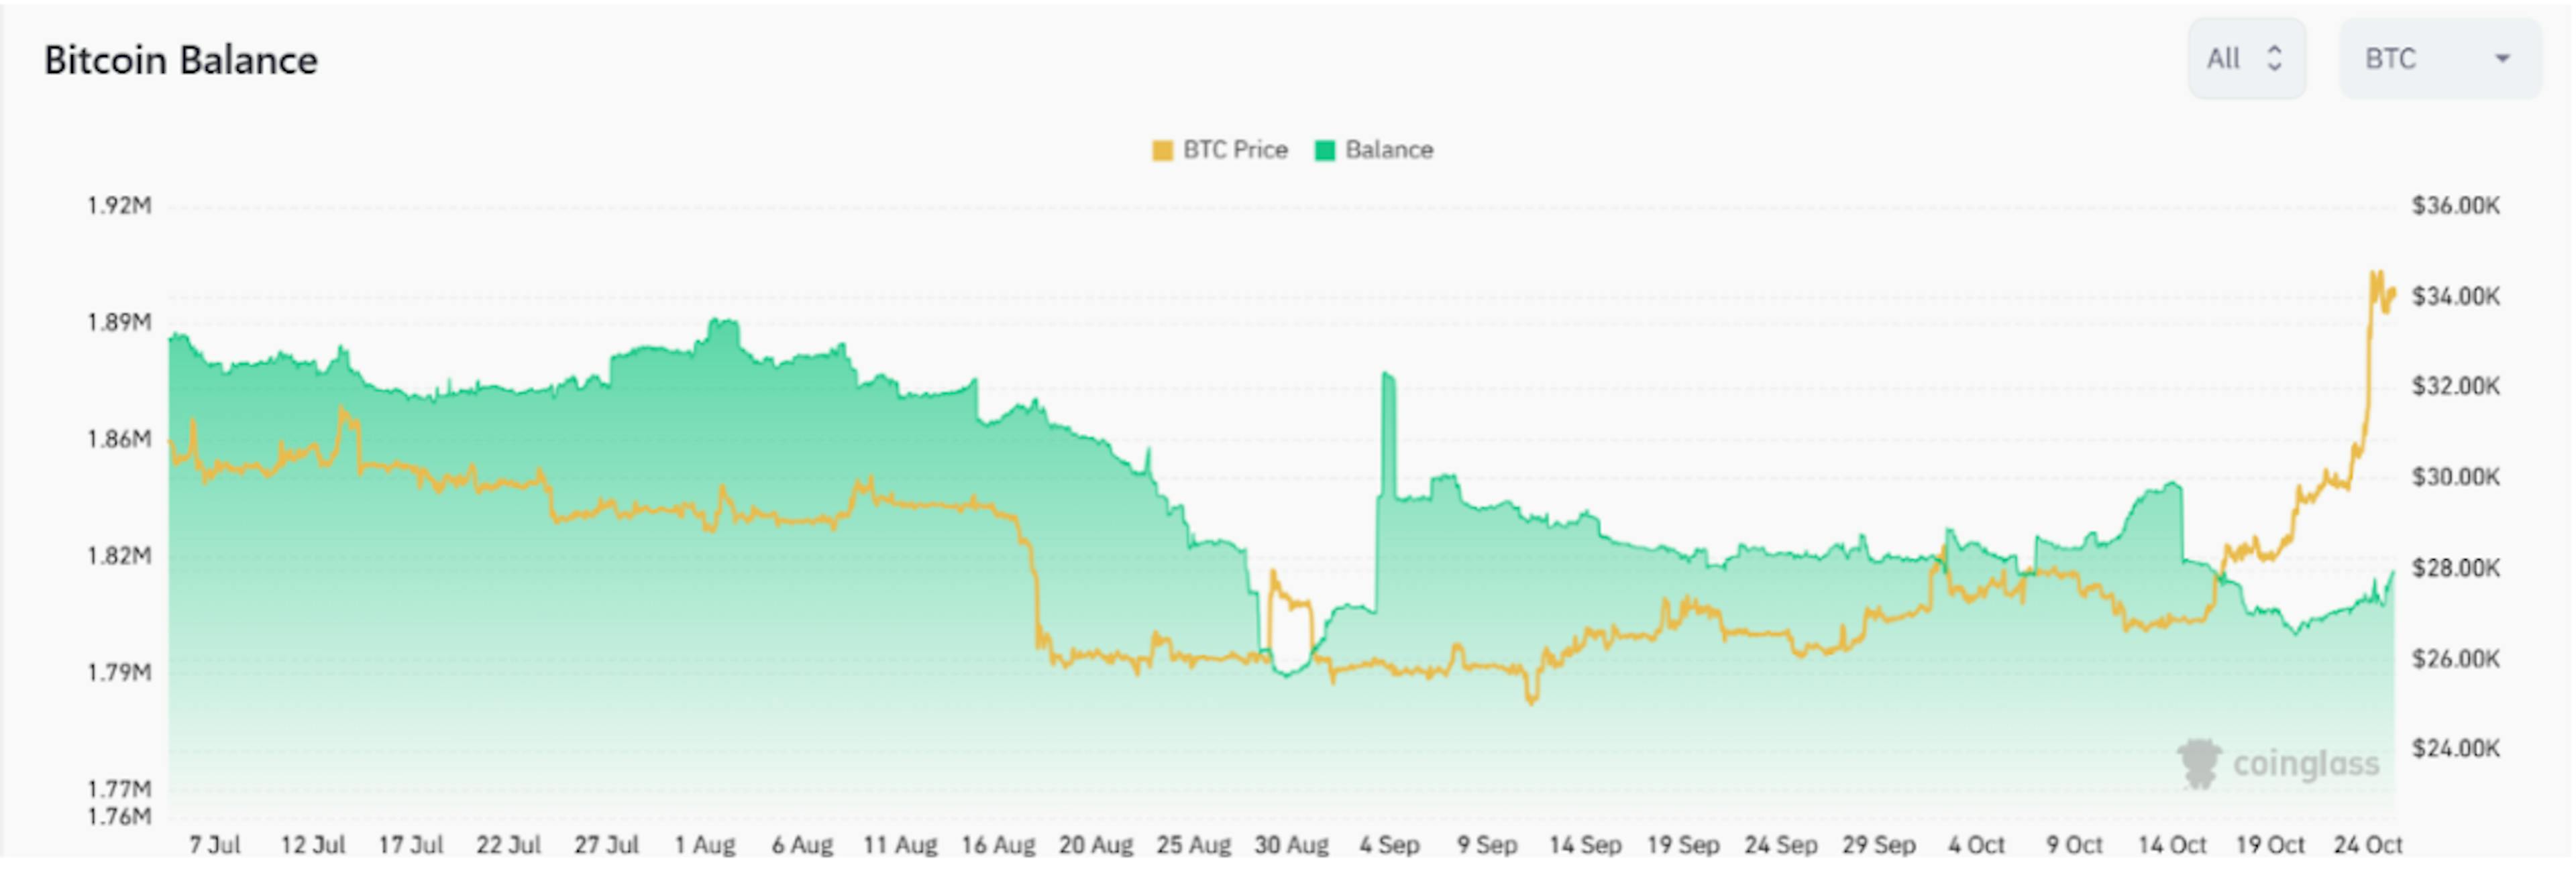 Bitcoin Balances on all Exchanges, Coinglass